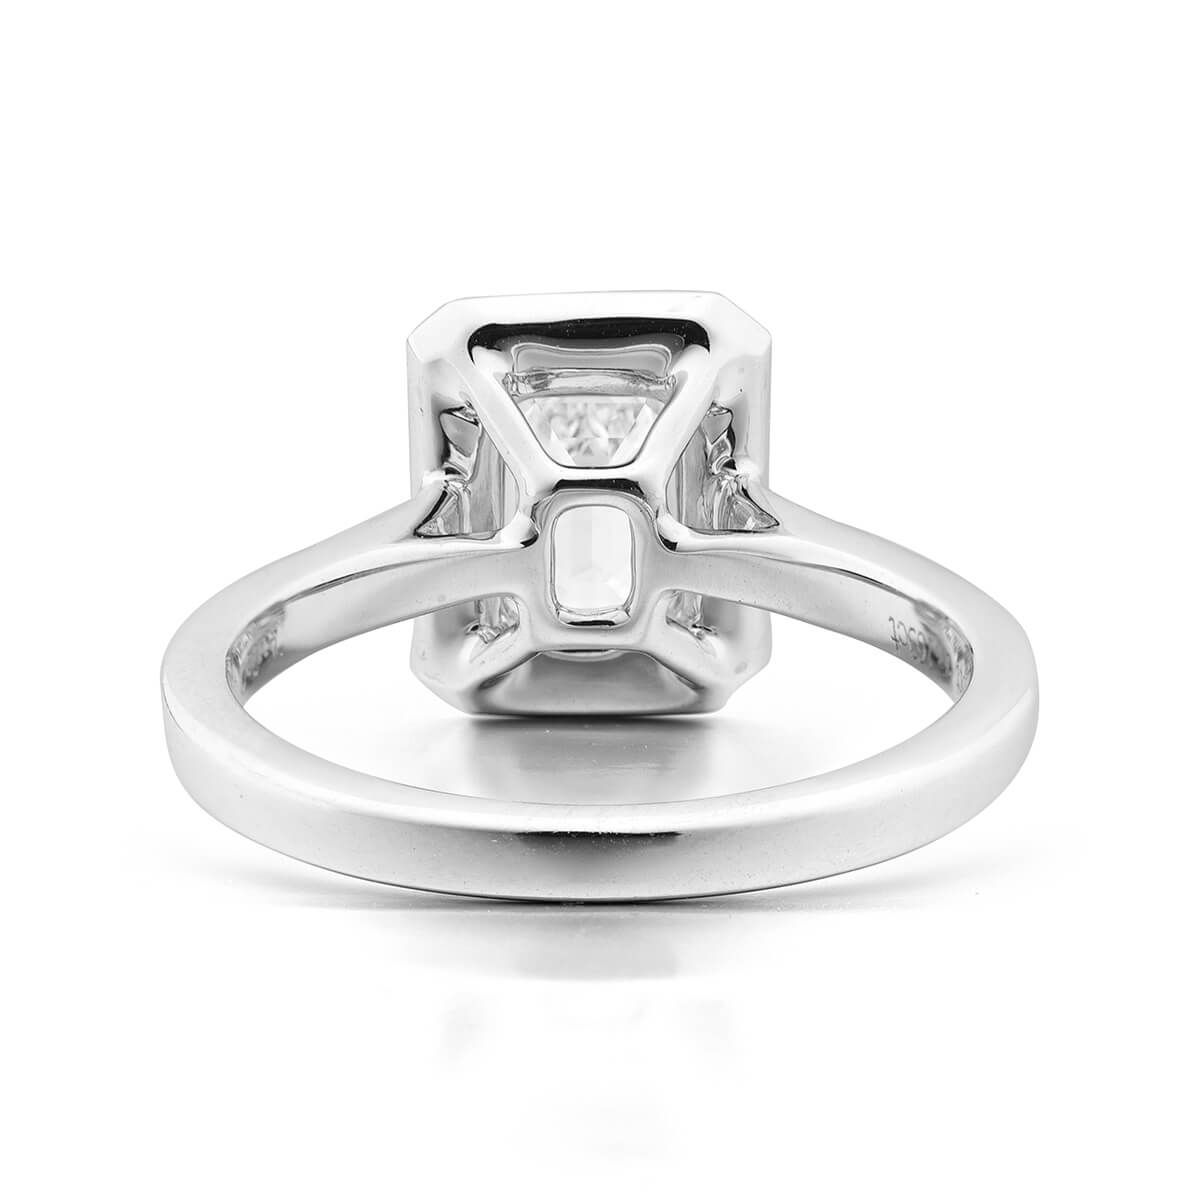  White Diamond Ring, 1.09 Ct. (1.25 Ct. TW), Emerald shape, GIA Certified, 2287401135